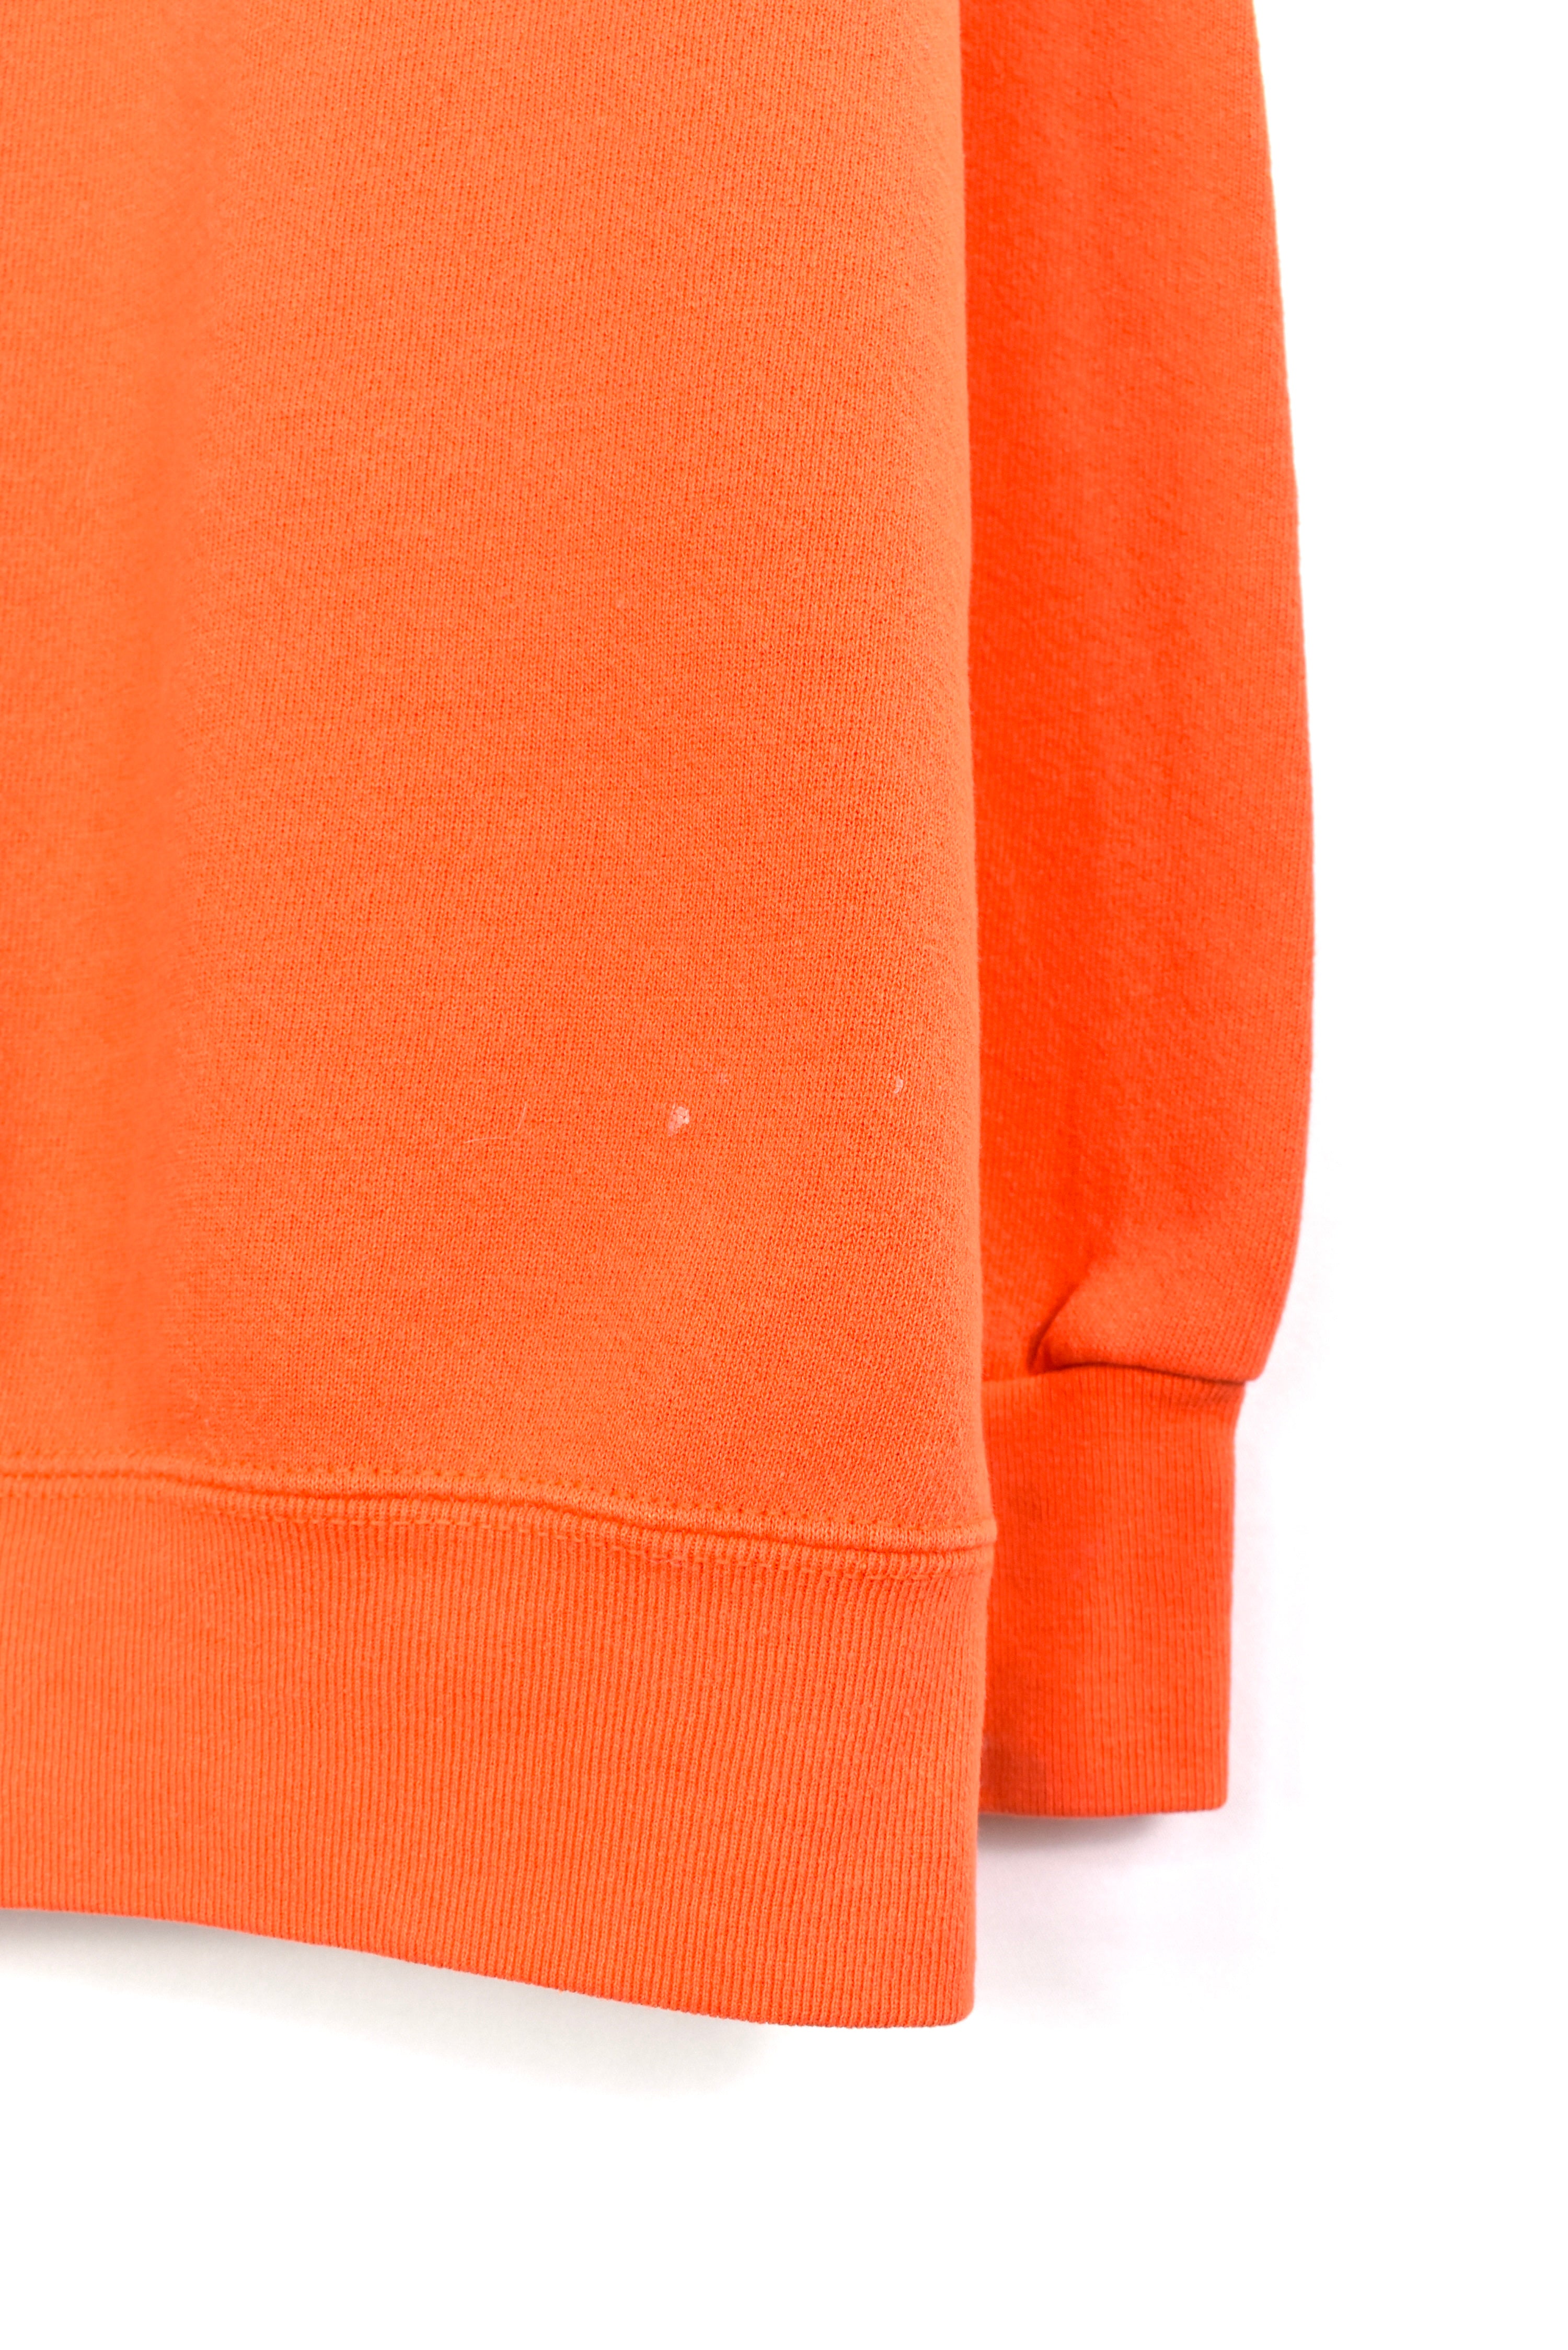 Vintage Chicago Bears sweatshirt, NFL embroidered crewneck - XL, orange PRO SPORT